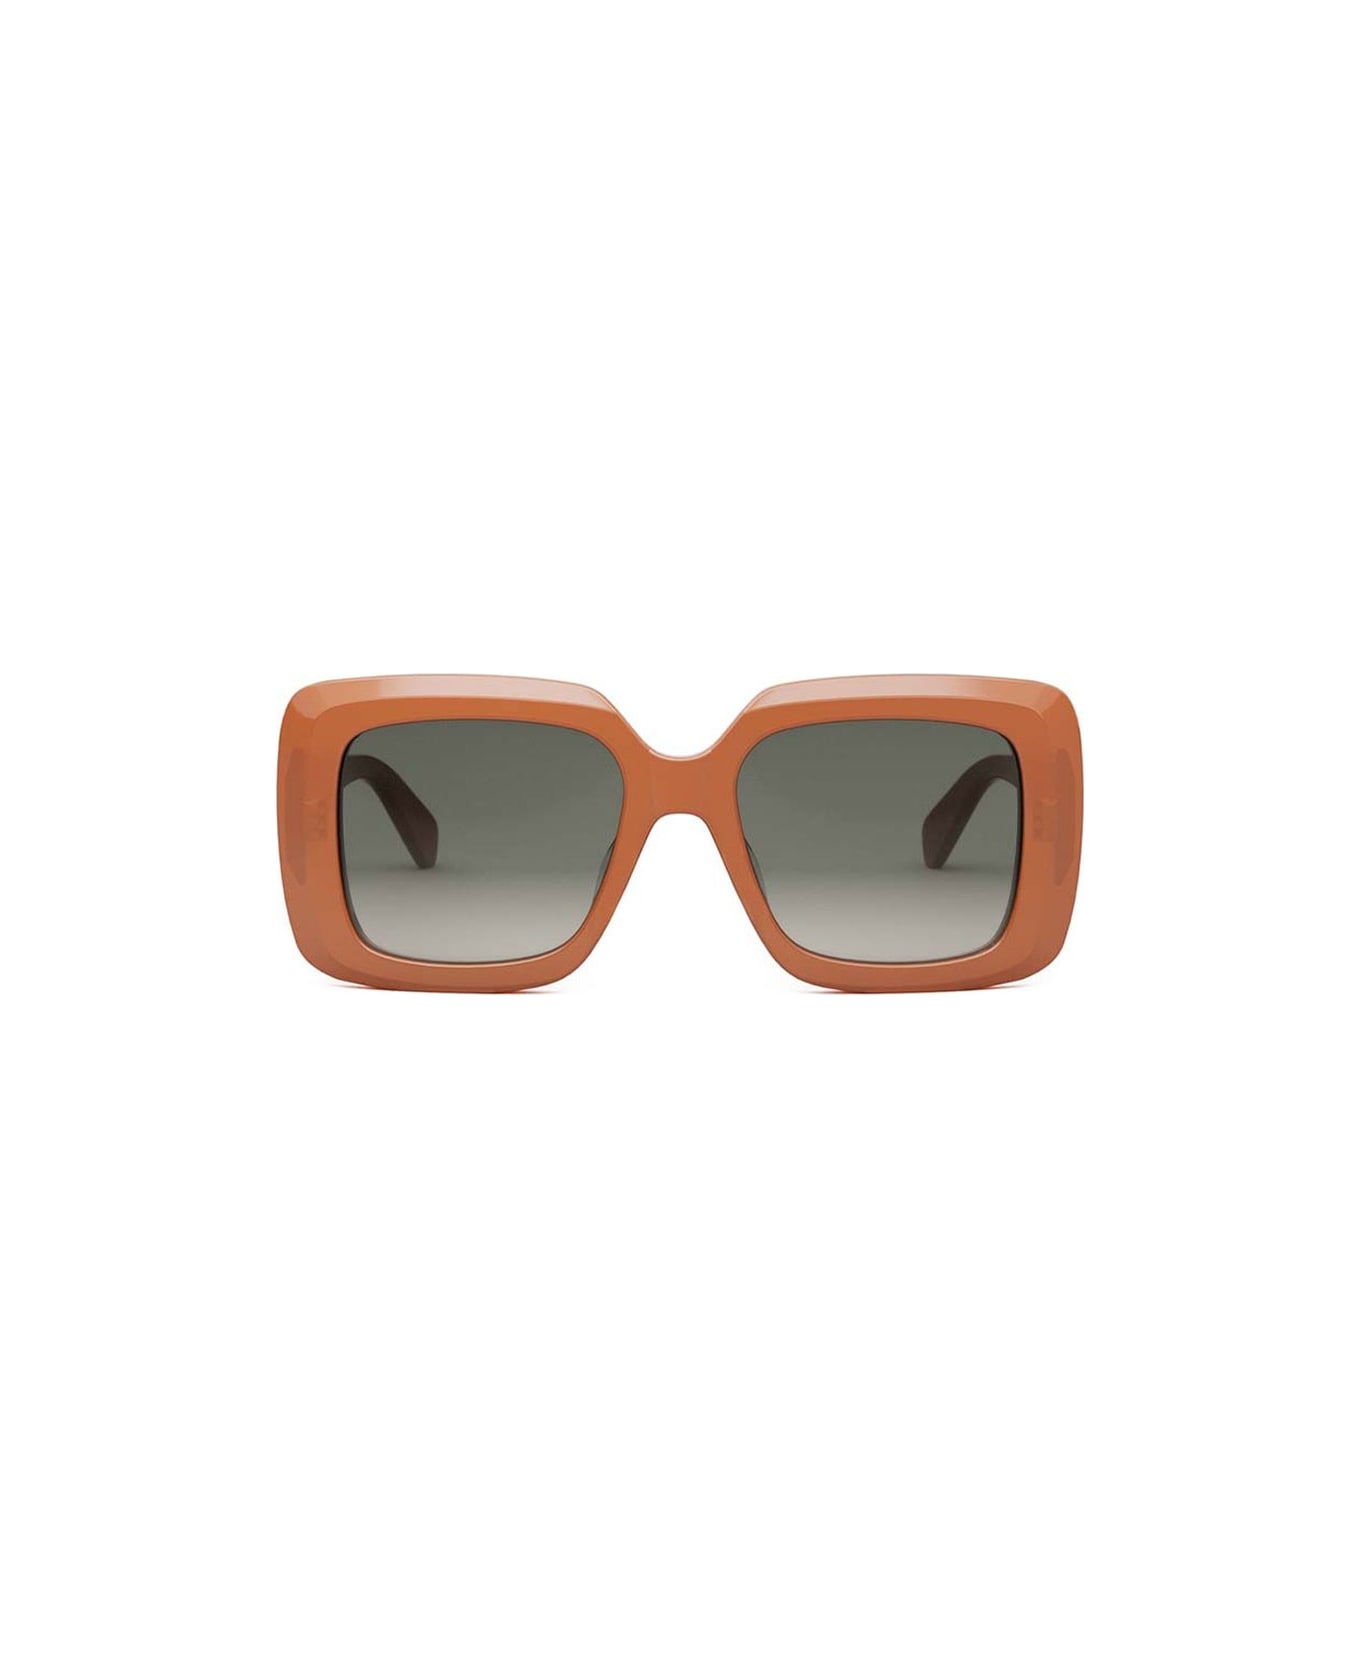 Celine Sunglasses - Arancione/Grigio